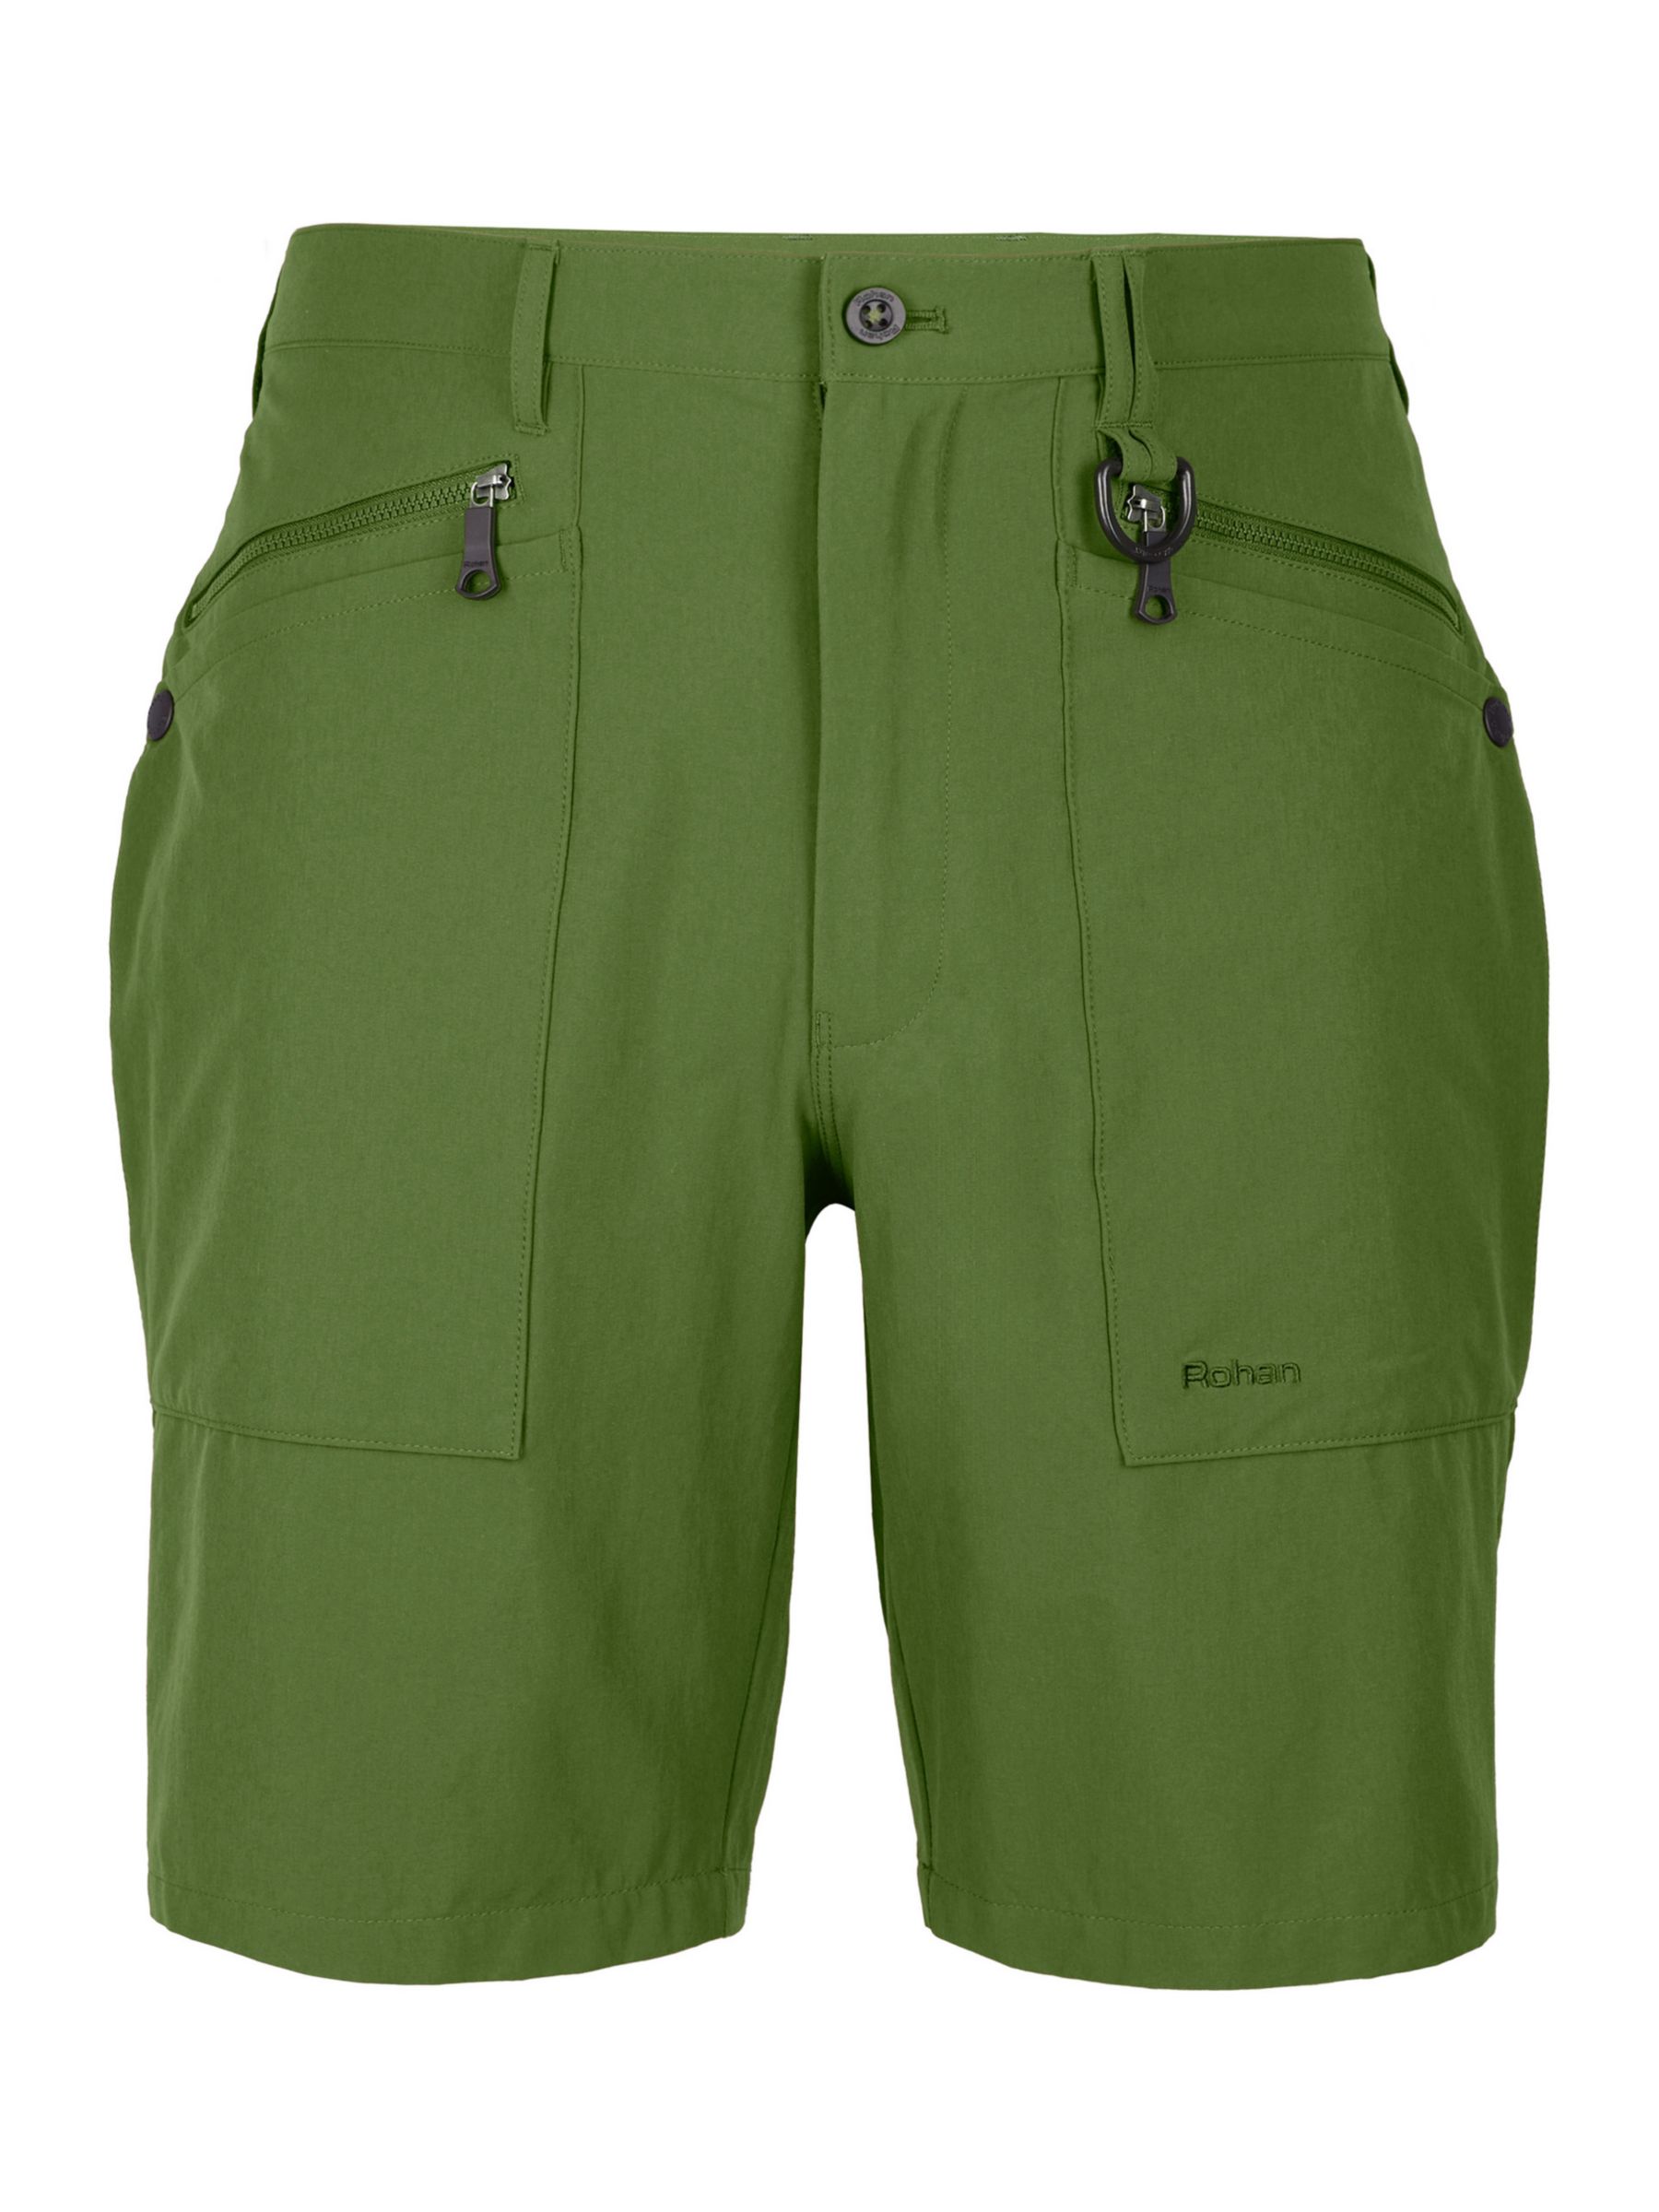 Rohan Multi-Pocket Stretch Bag Hiking Shorts, Highland Green, 32R